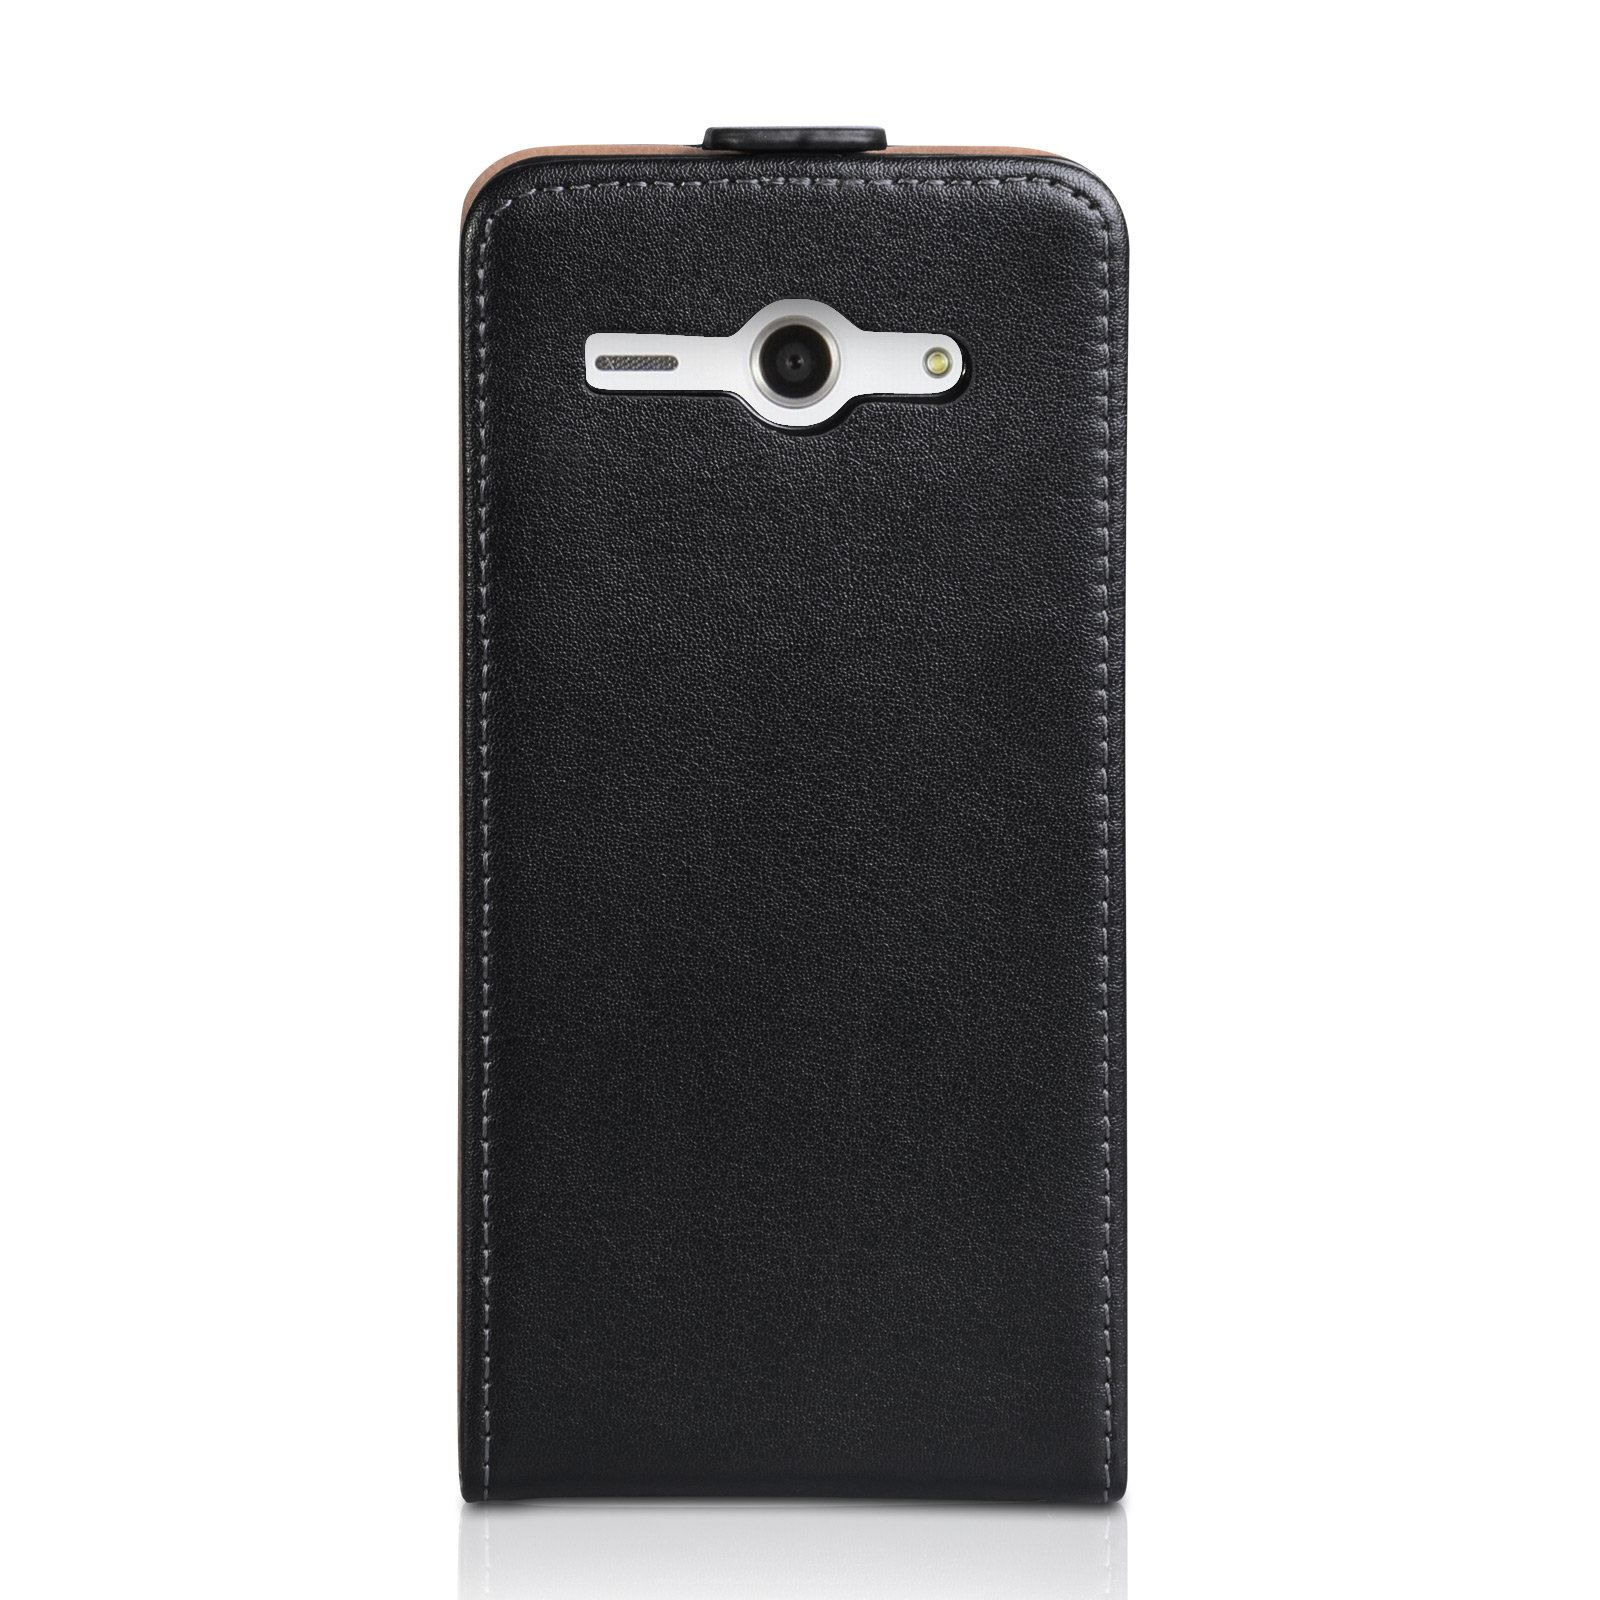 Caseflex Huawei Ascend Y530 Real Leather Flip Case - Black